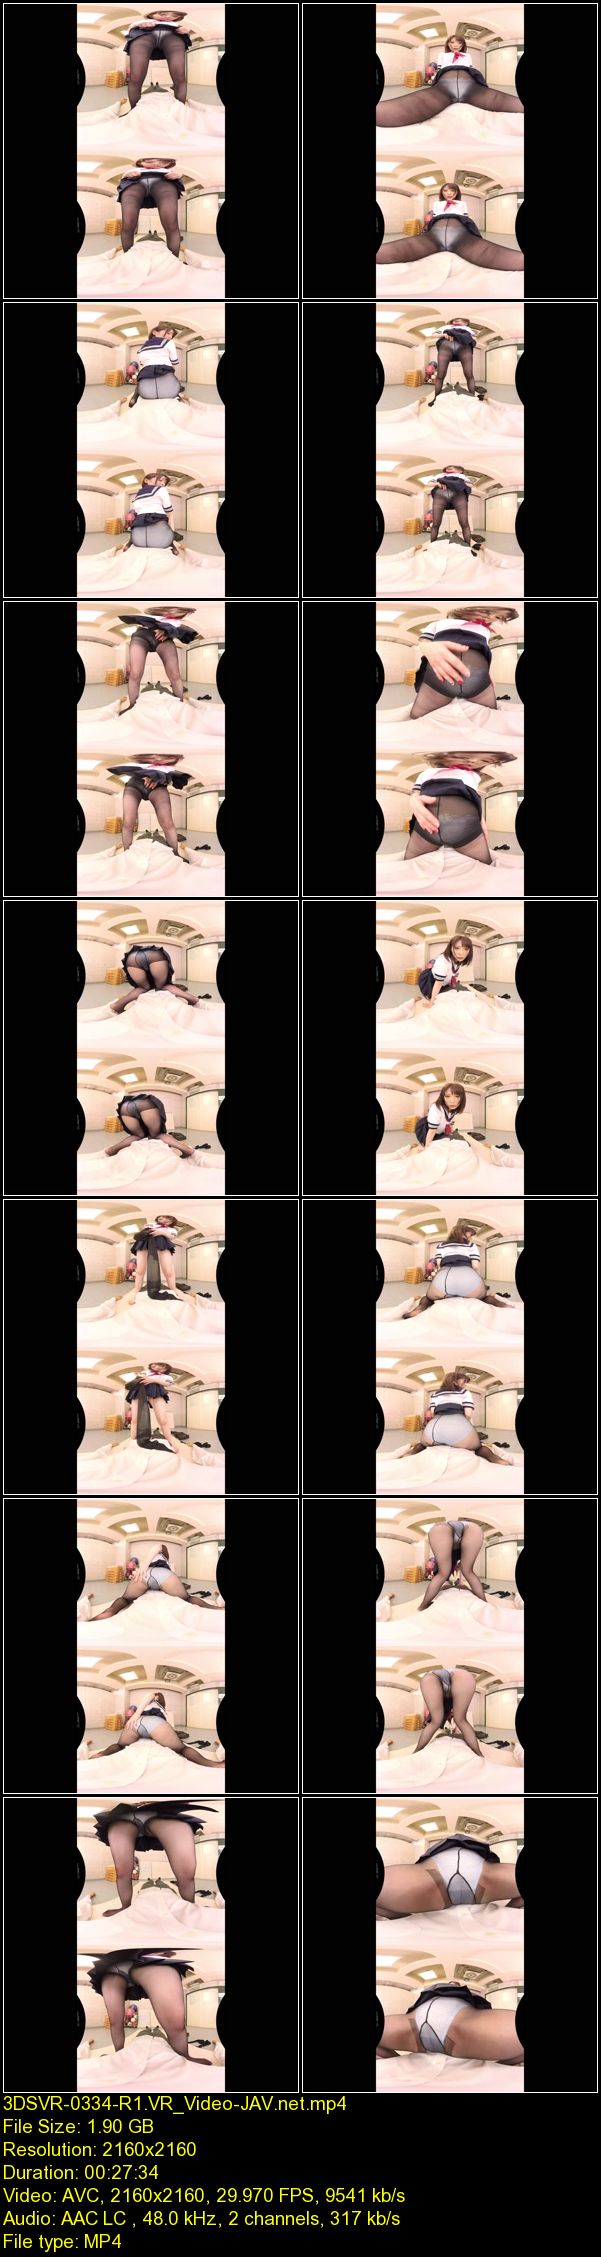 Download Japanese Adult Video Rin Asuka [DSVR 334] 【VR AV】パンストフェチVR 黒パンスト女子○生美尻コキパンティずらし中出しセックス 2018 11 09